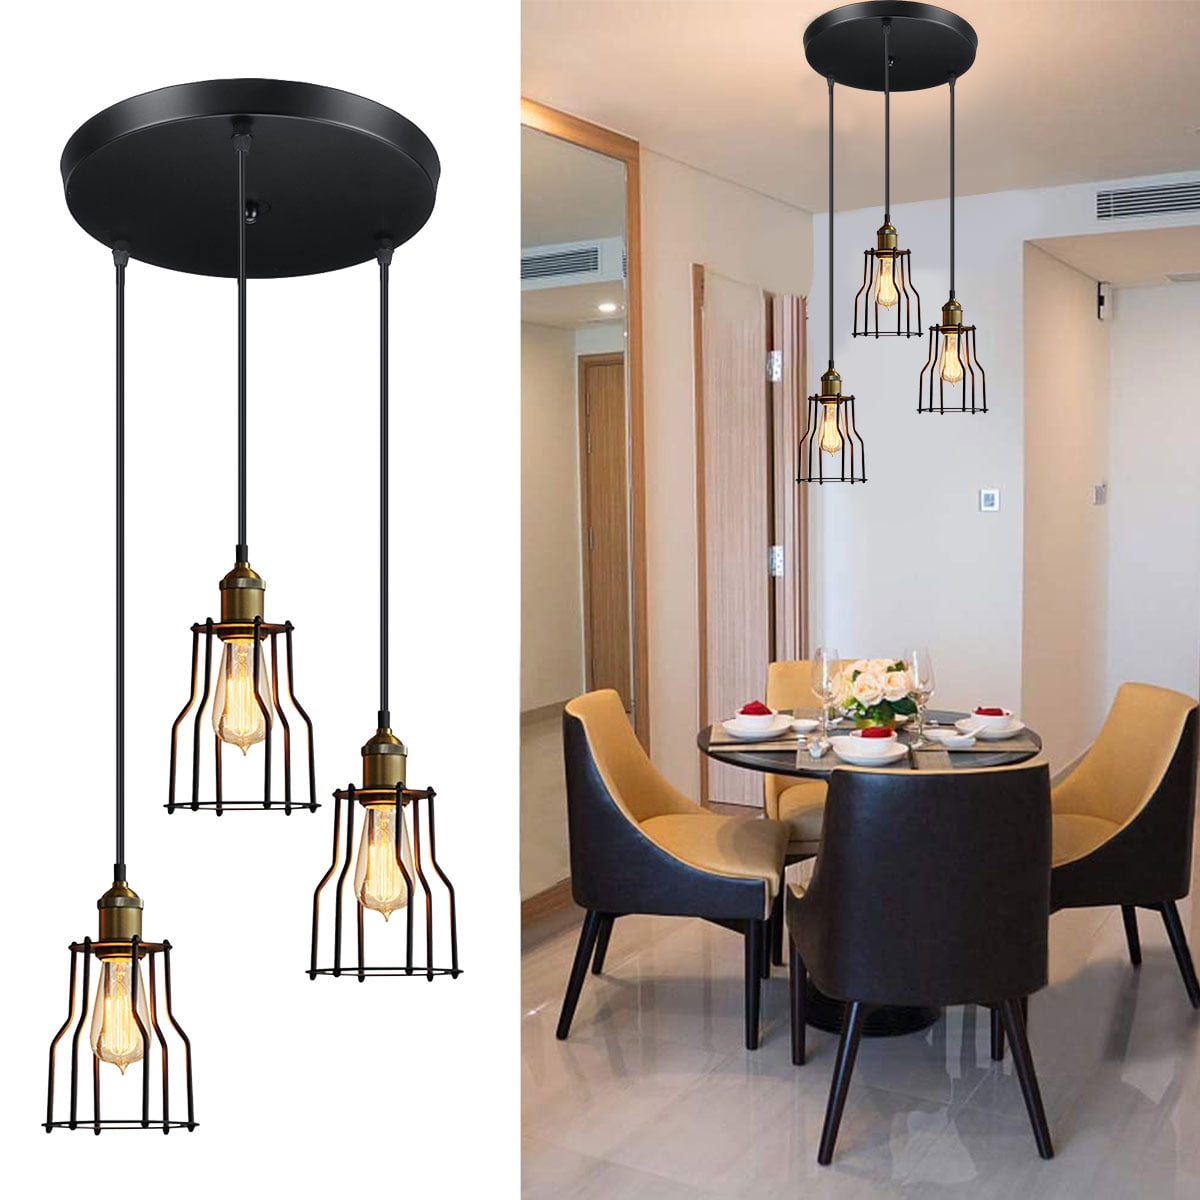 Industrial Wall Lights Metal Cage Lamp Wall Lighting Fixture E27 Socket for Island Living Room Dining Room Bedroom